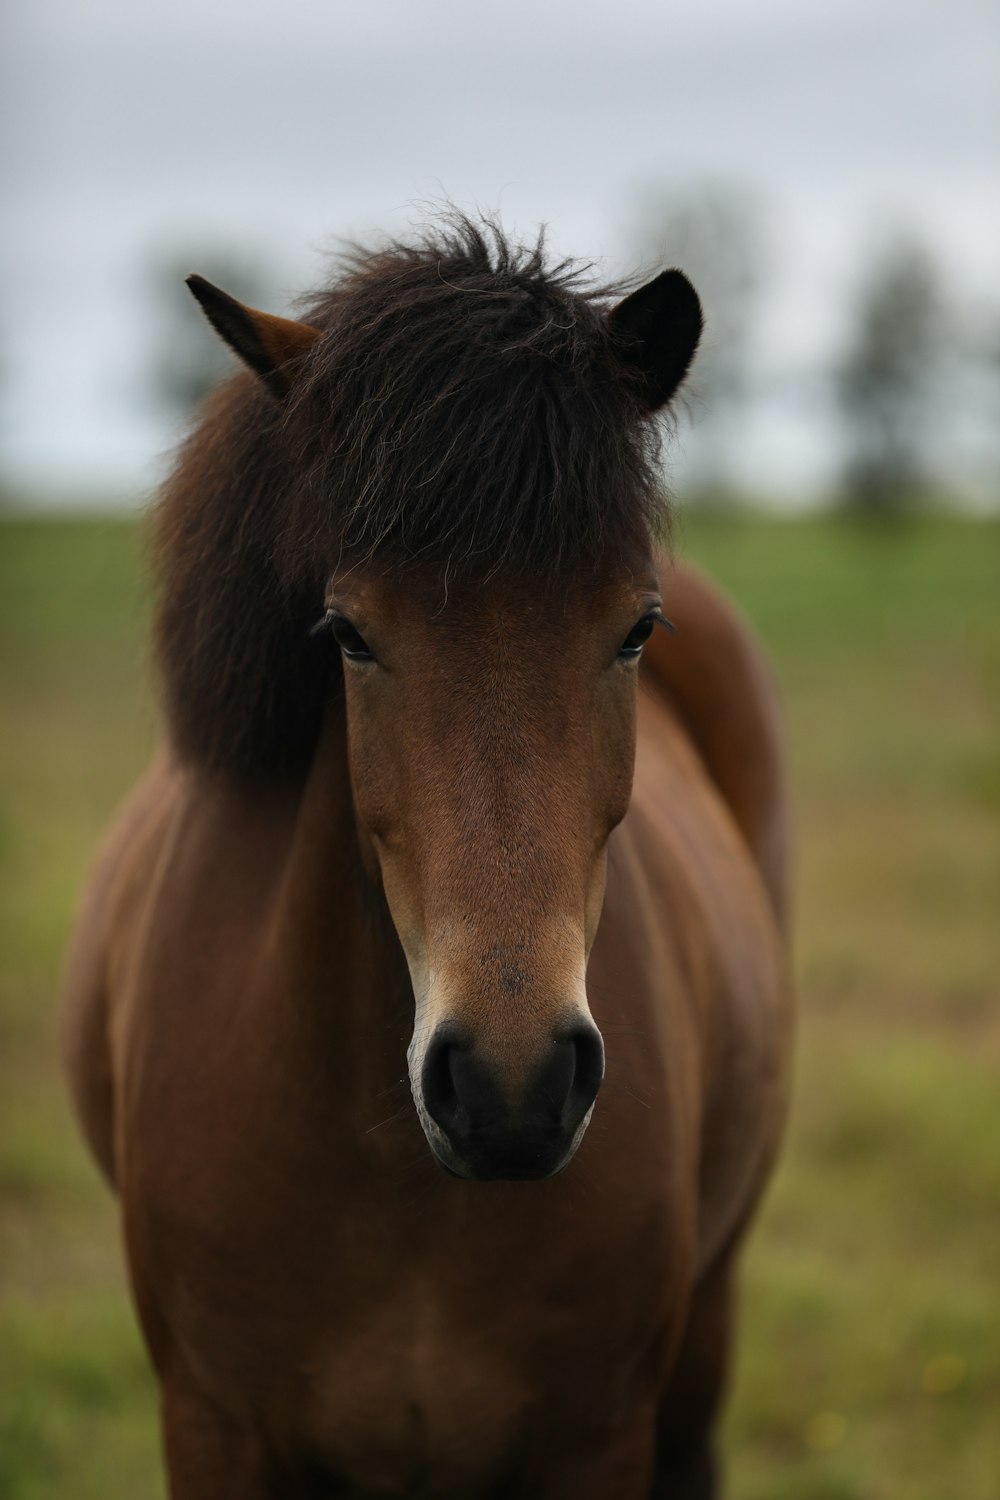 brown horse on grass field